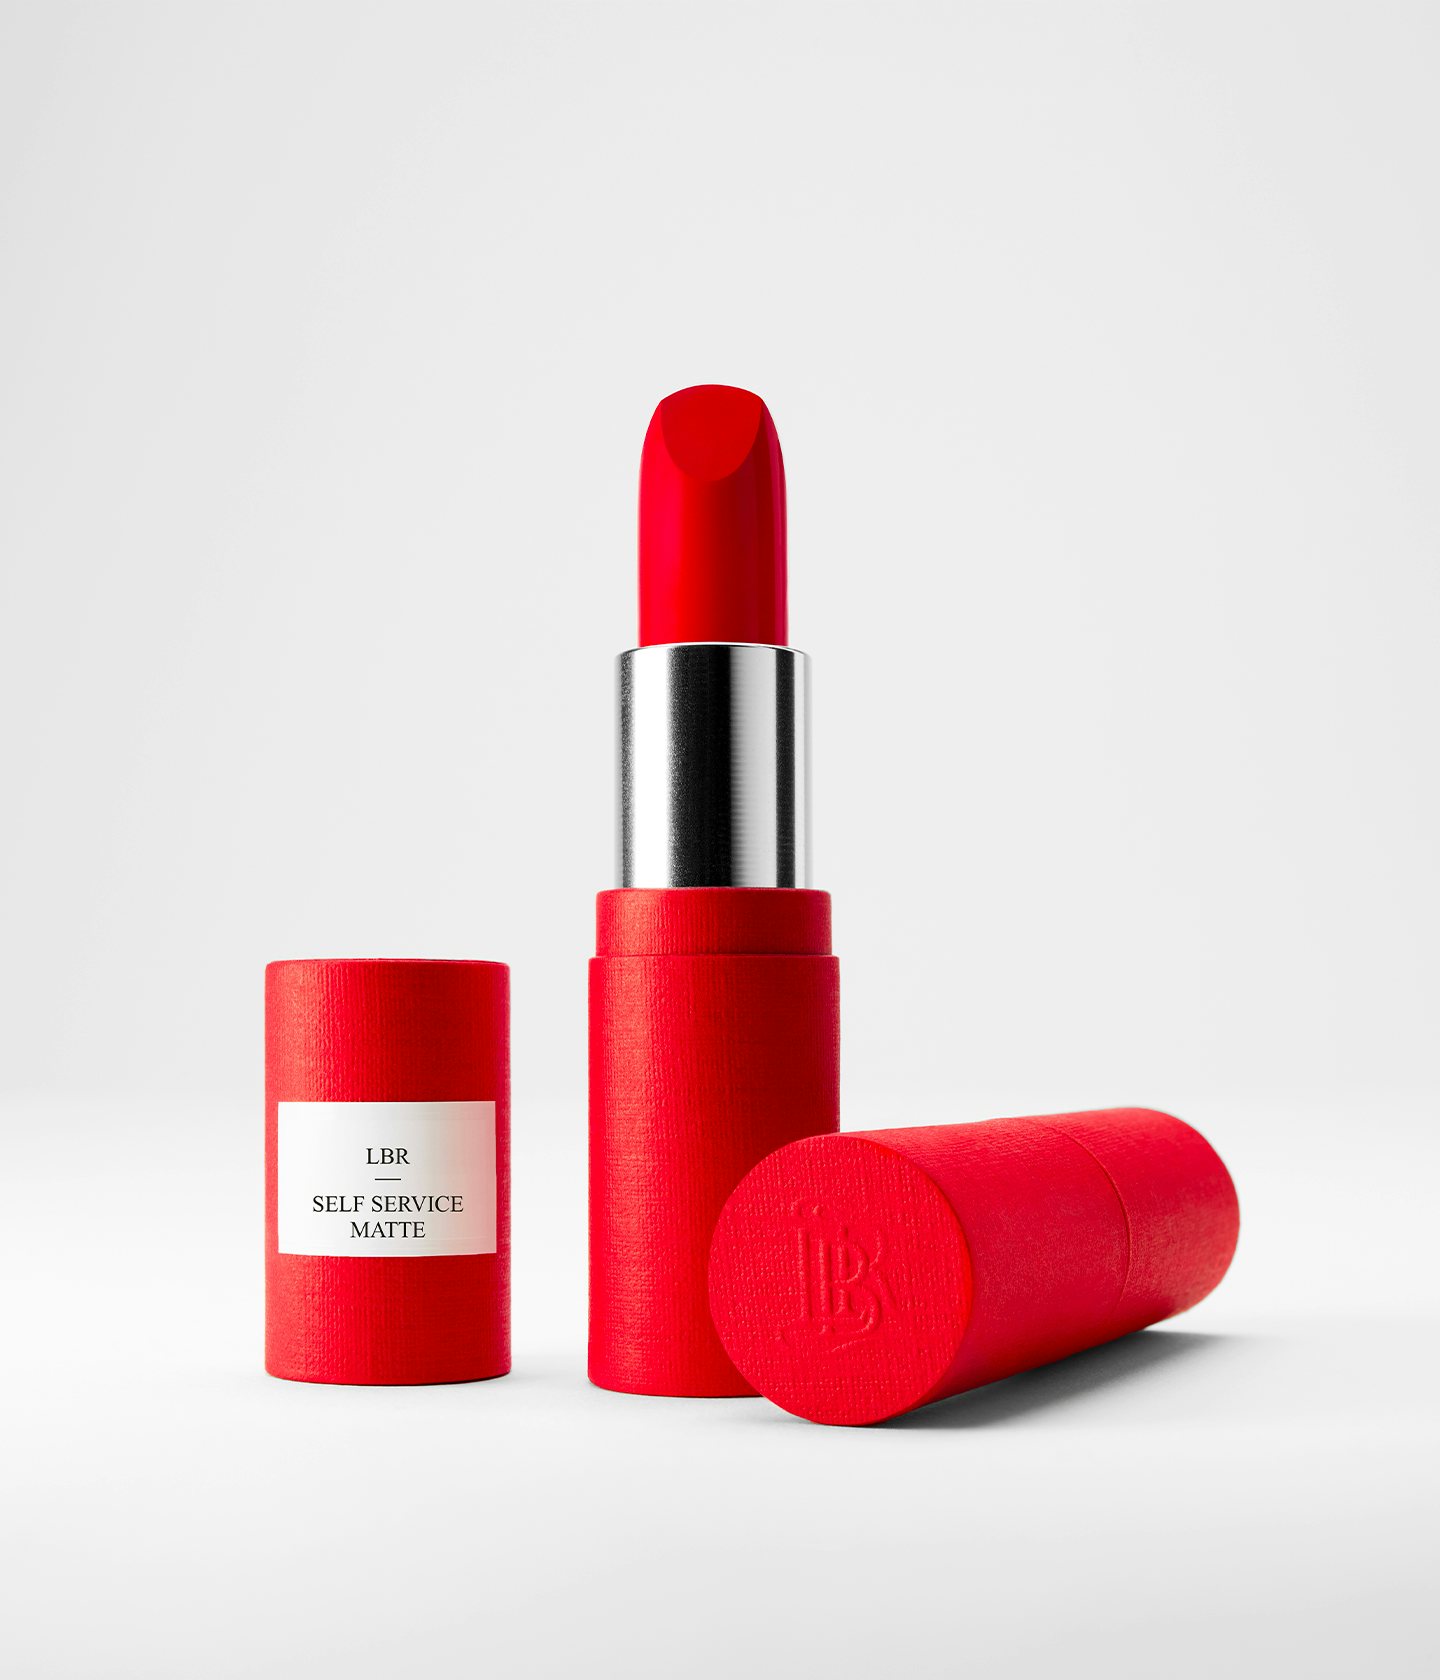 La bouche rouge Le Rouge Self Service Matte lipstick in the red paper case